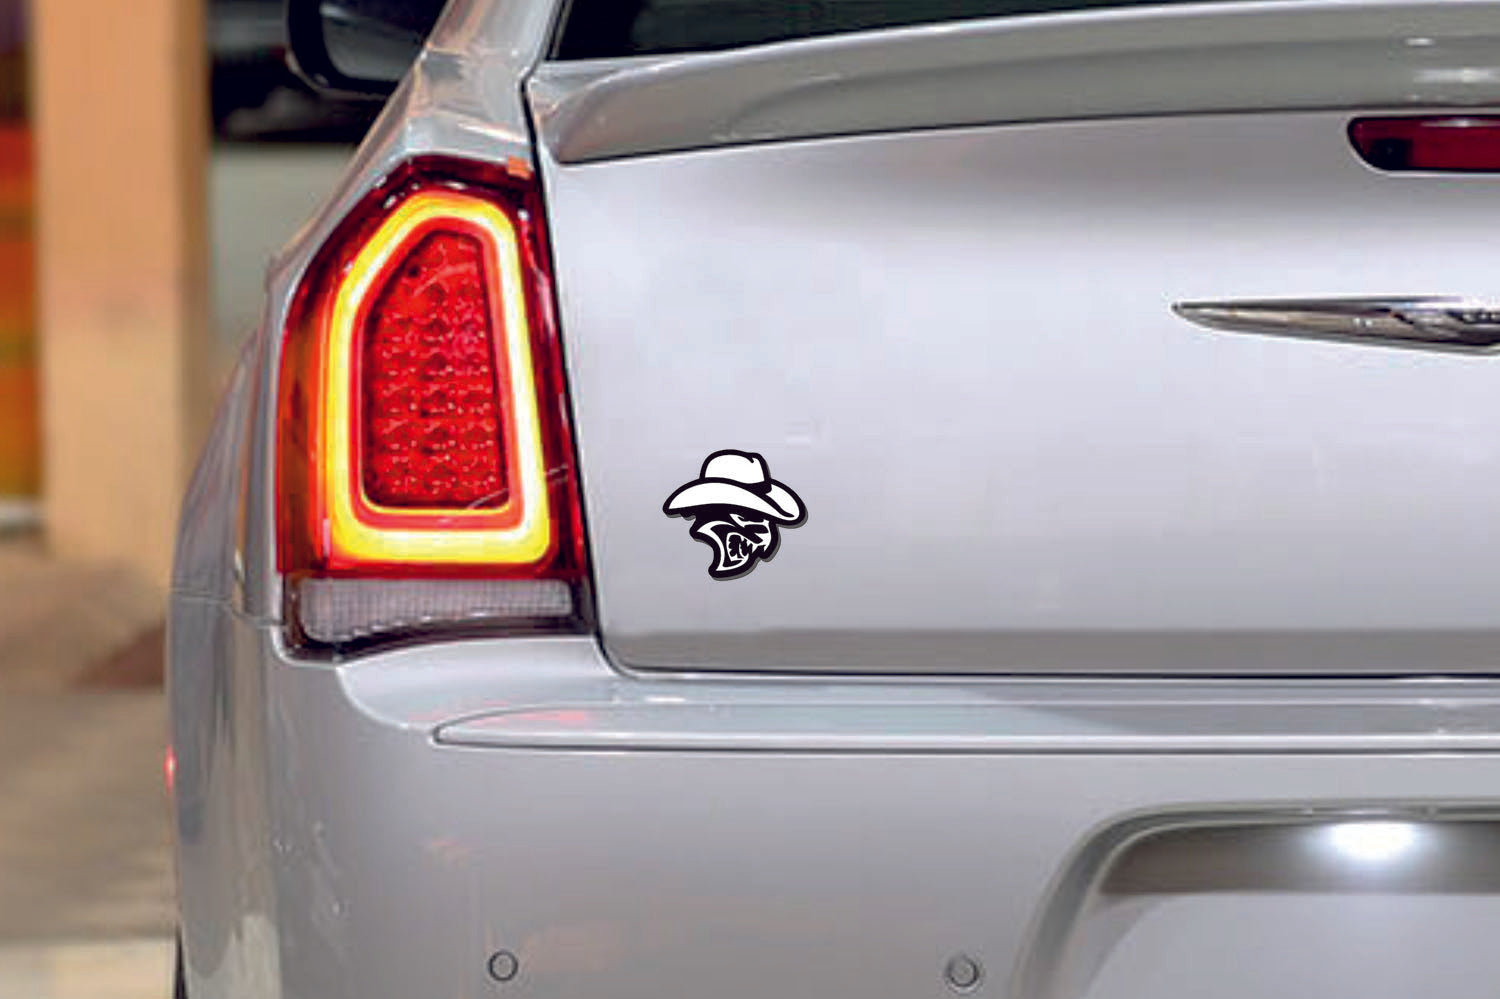 Chrysler tailgate trunk rear emblem with Hellcat Cowboy logo - decoinfabric